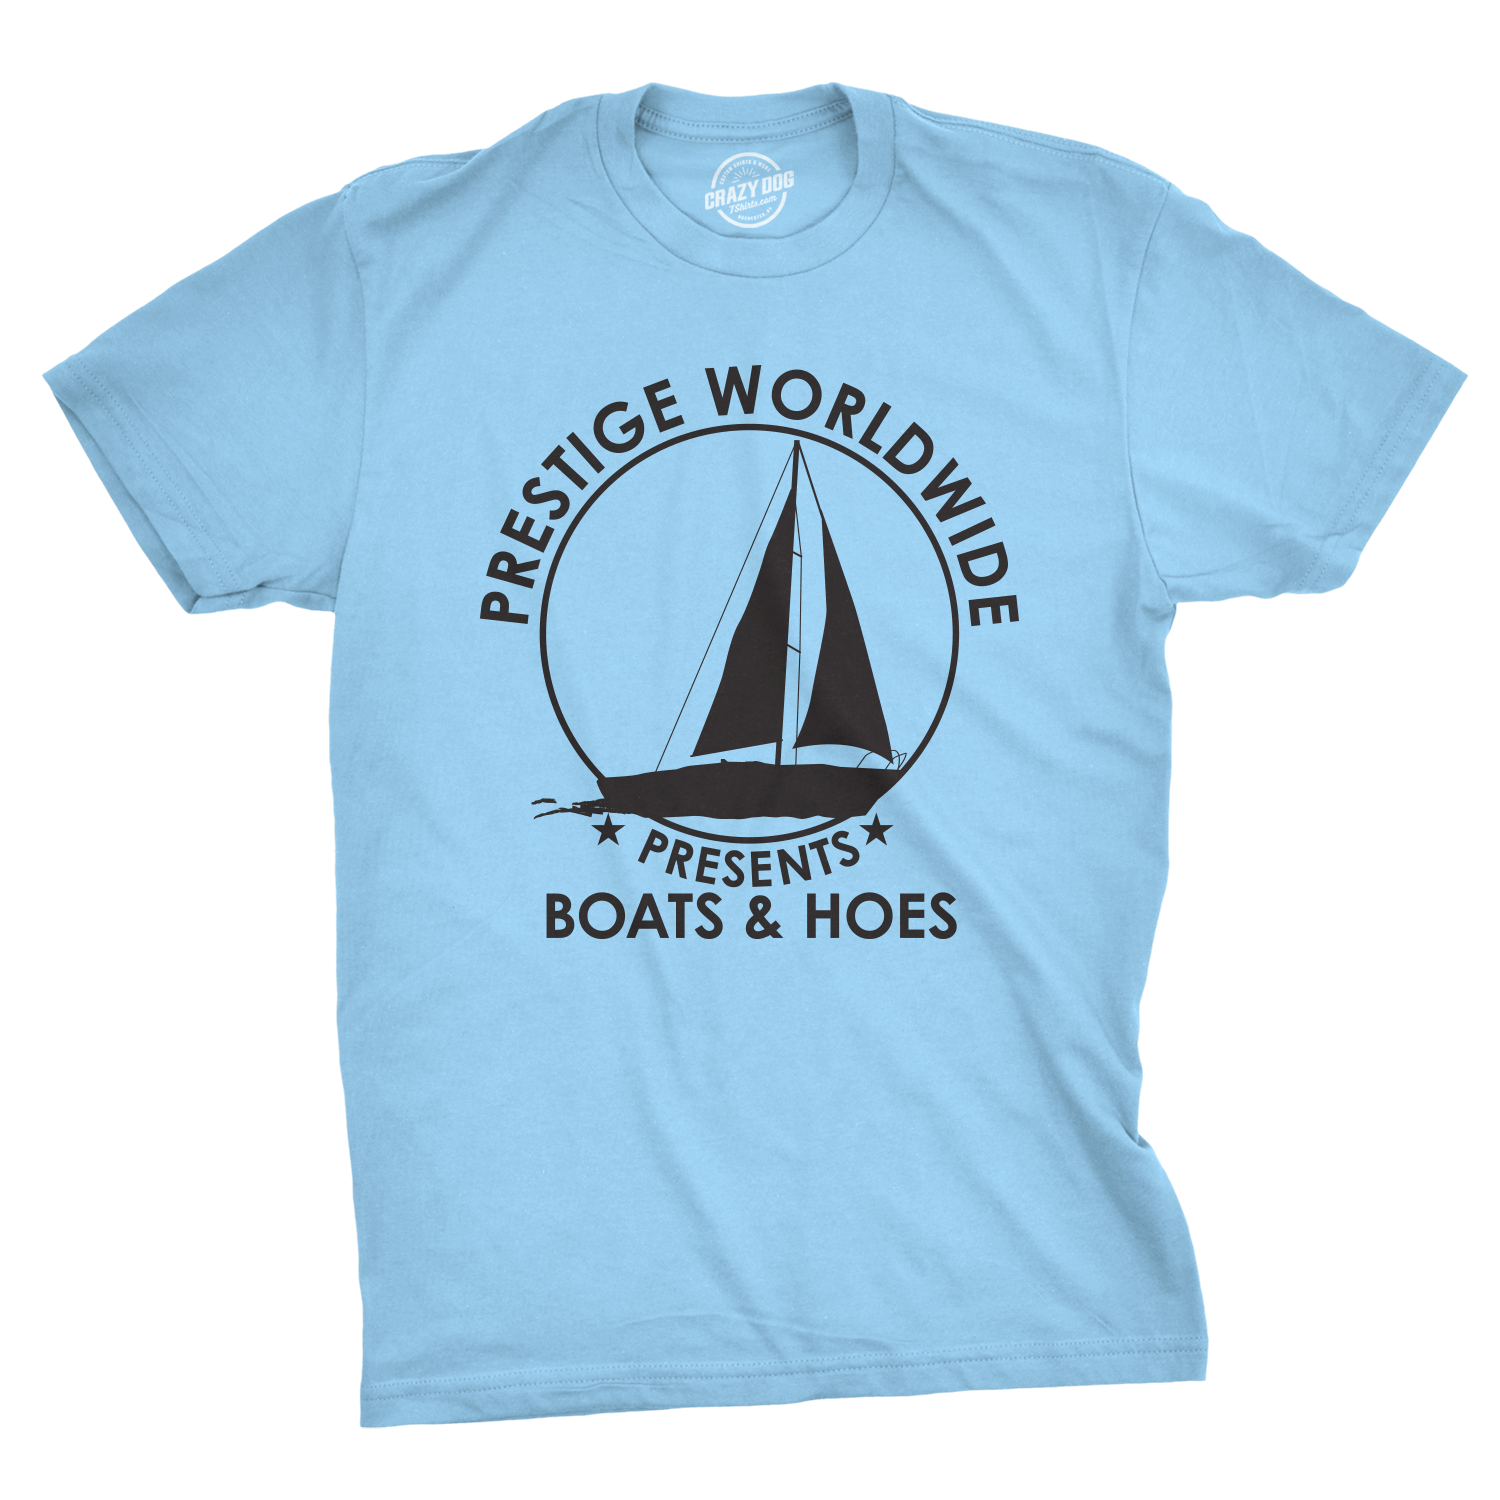 Funny Light Blue Prestige Worldwide Boats & Hoes Mens T Shirt Nerdy TV & Movies Tee